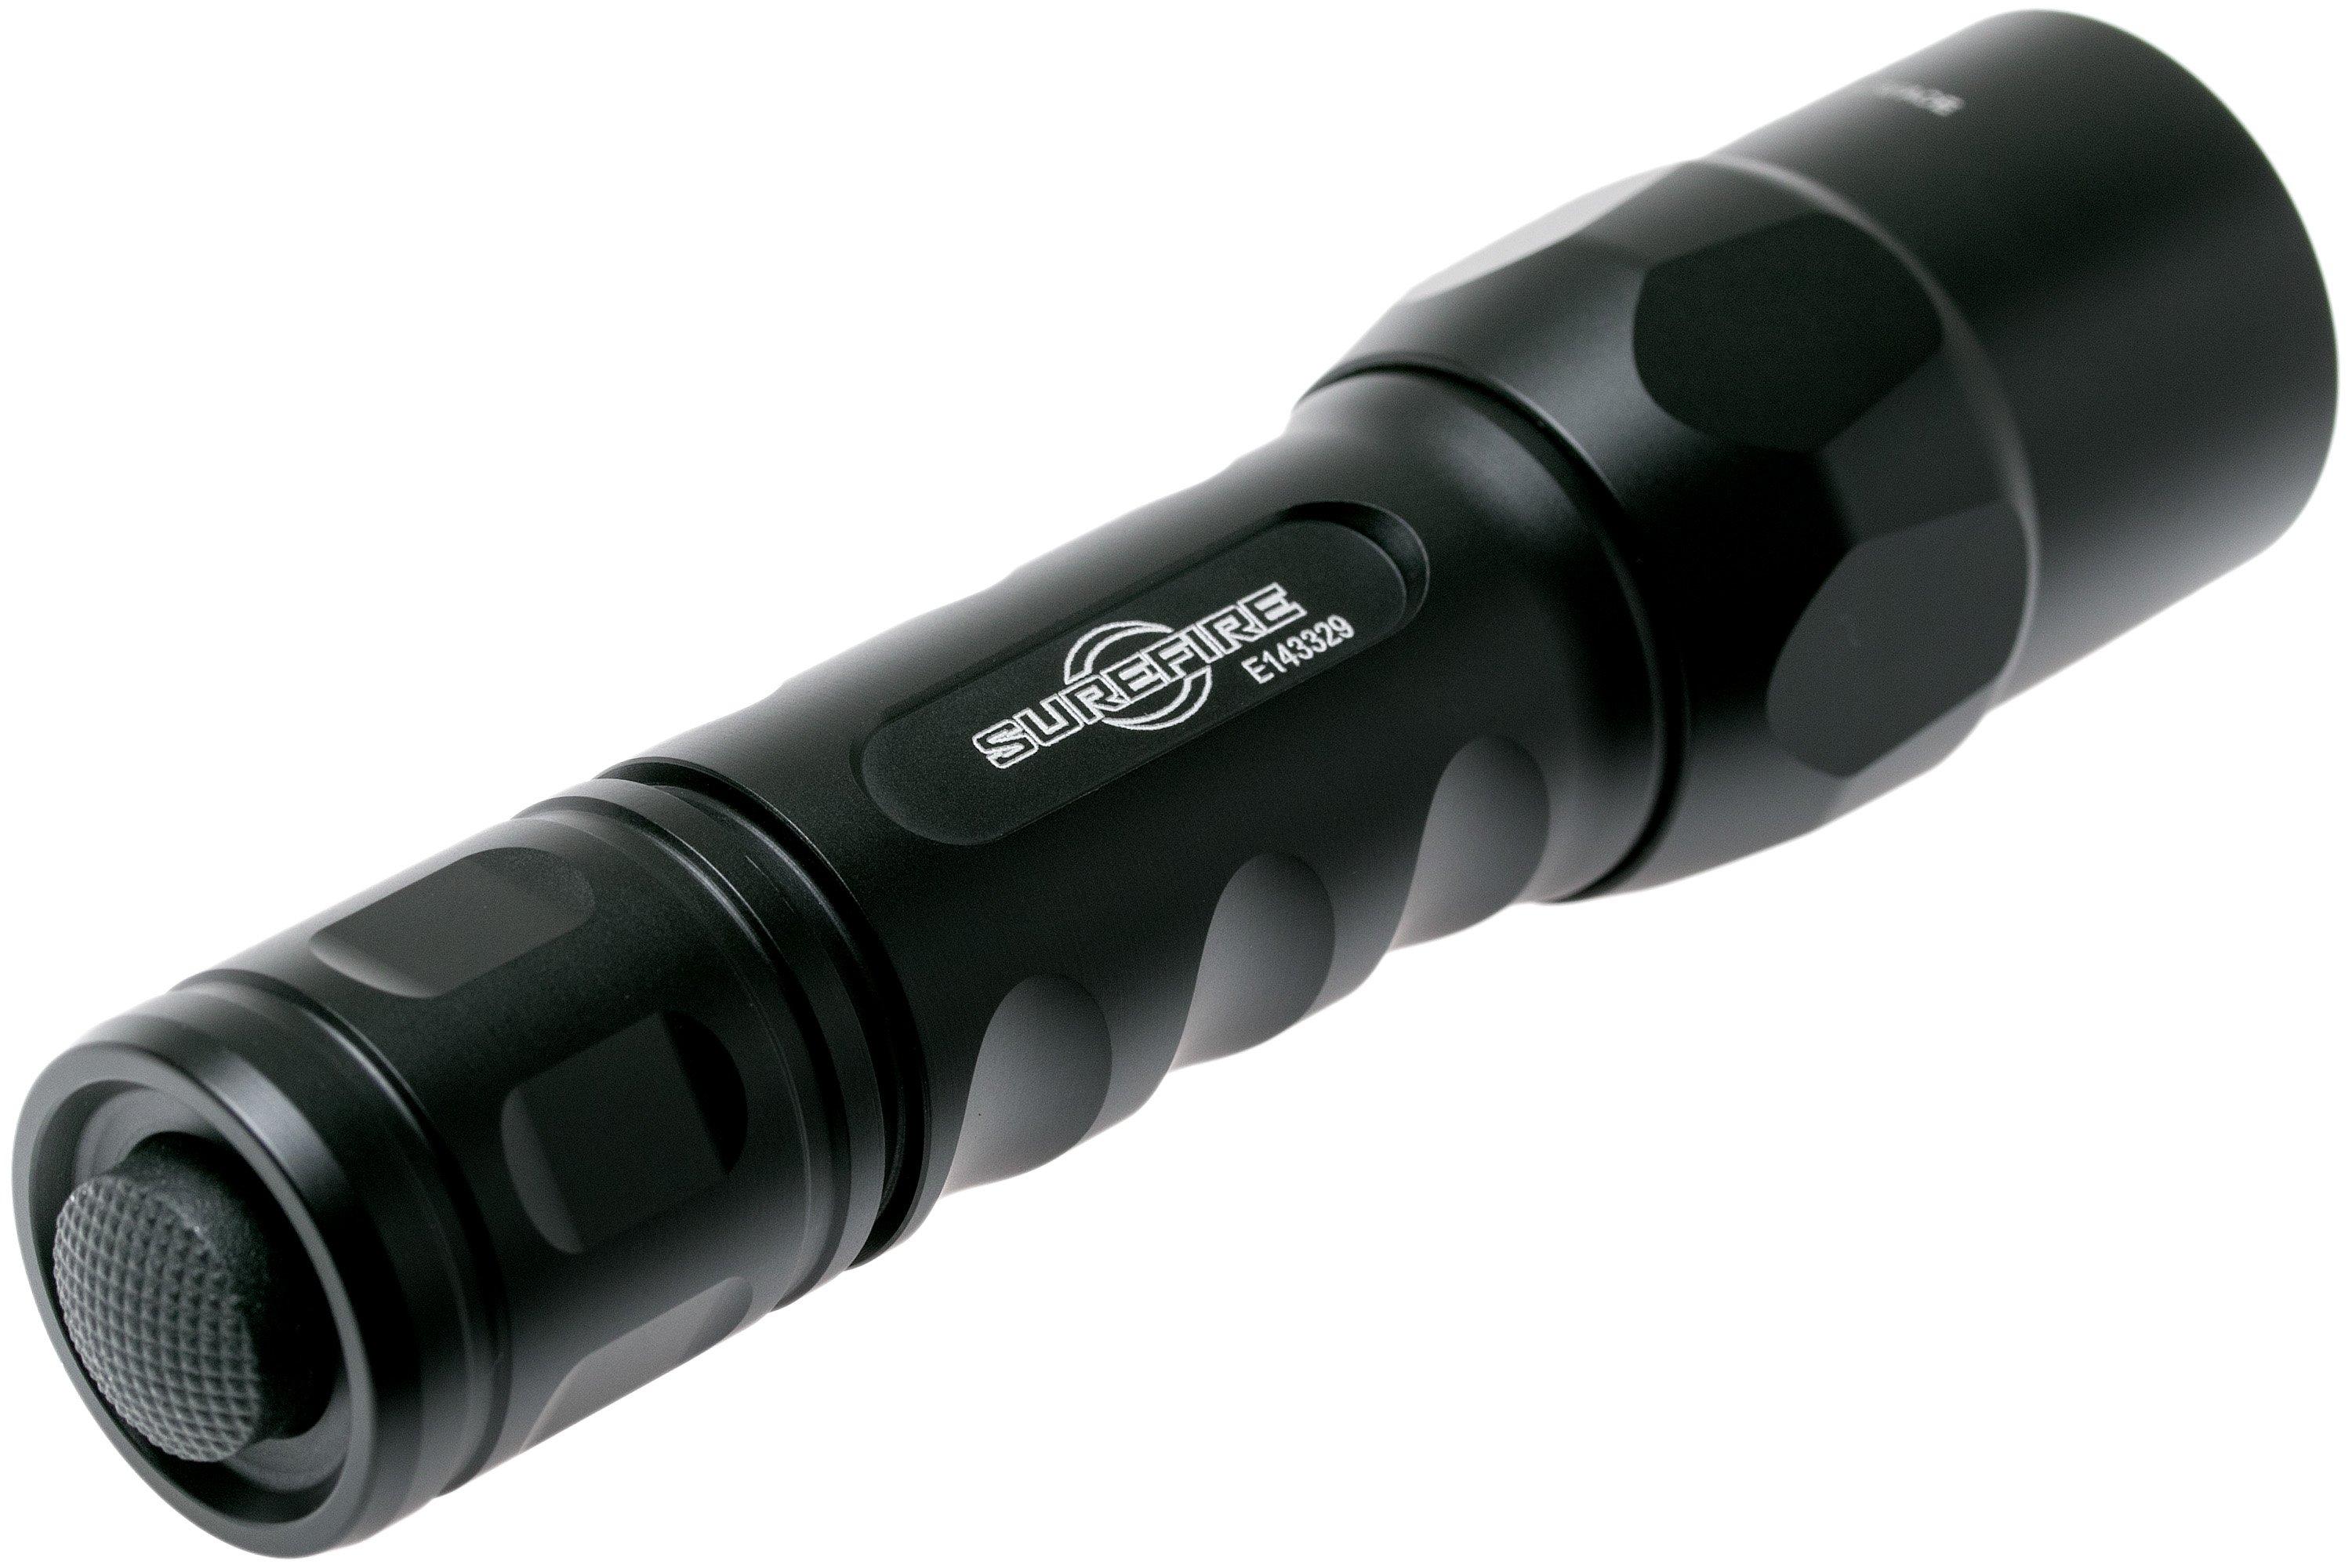 SureFire 6PX Pro dual-output LED-flashlight Advantageously shopping at 